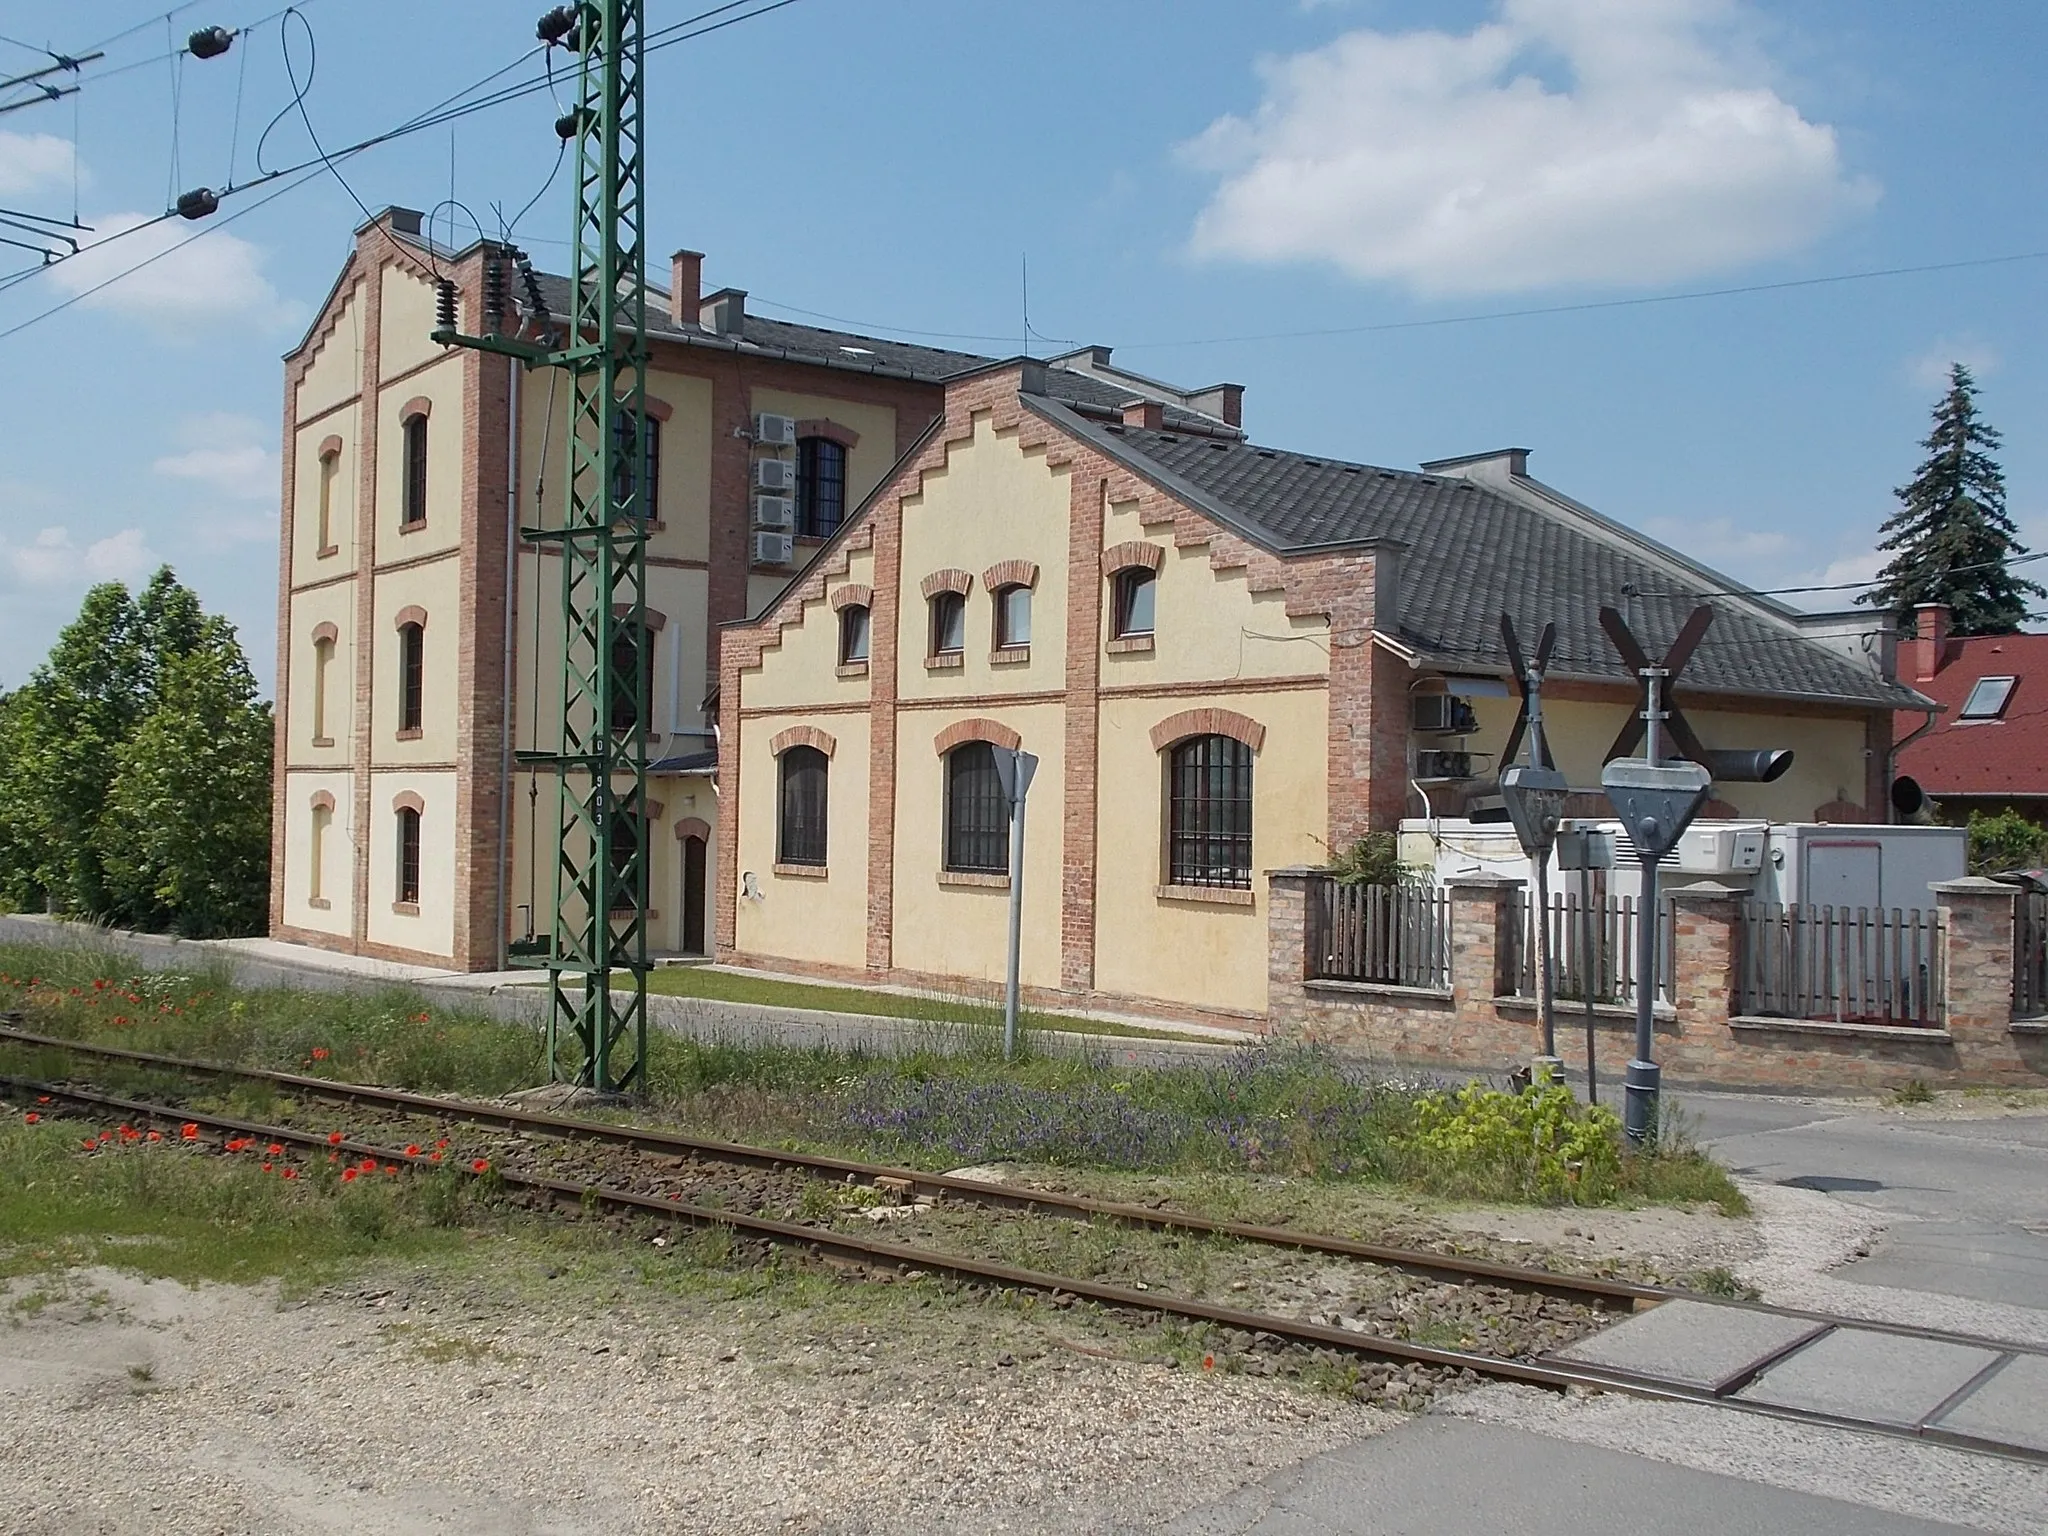 Photo showing: : Former mill now restaurant. - Csokonai utca, Alvég, Veresegyház, Pest County, Hungary.